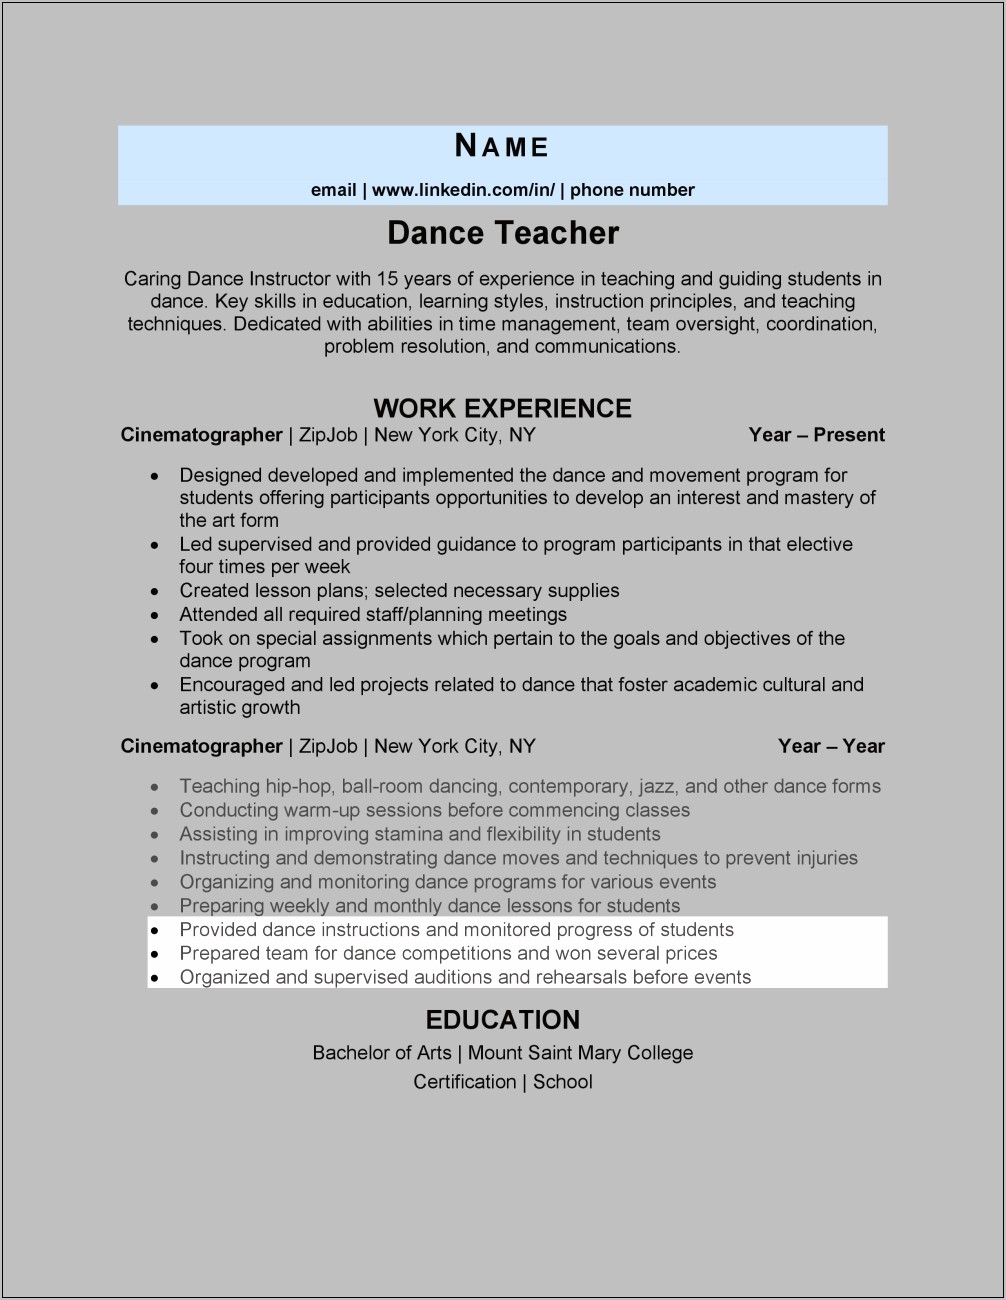 Dance Teacher Jobs Descriptions Resume